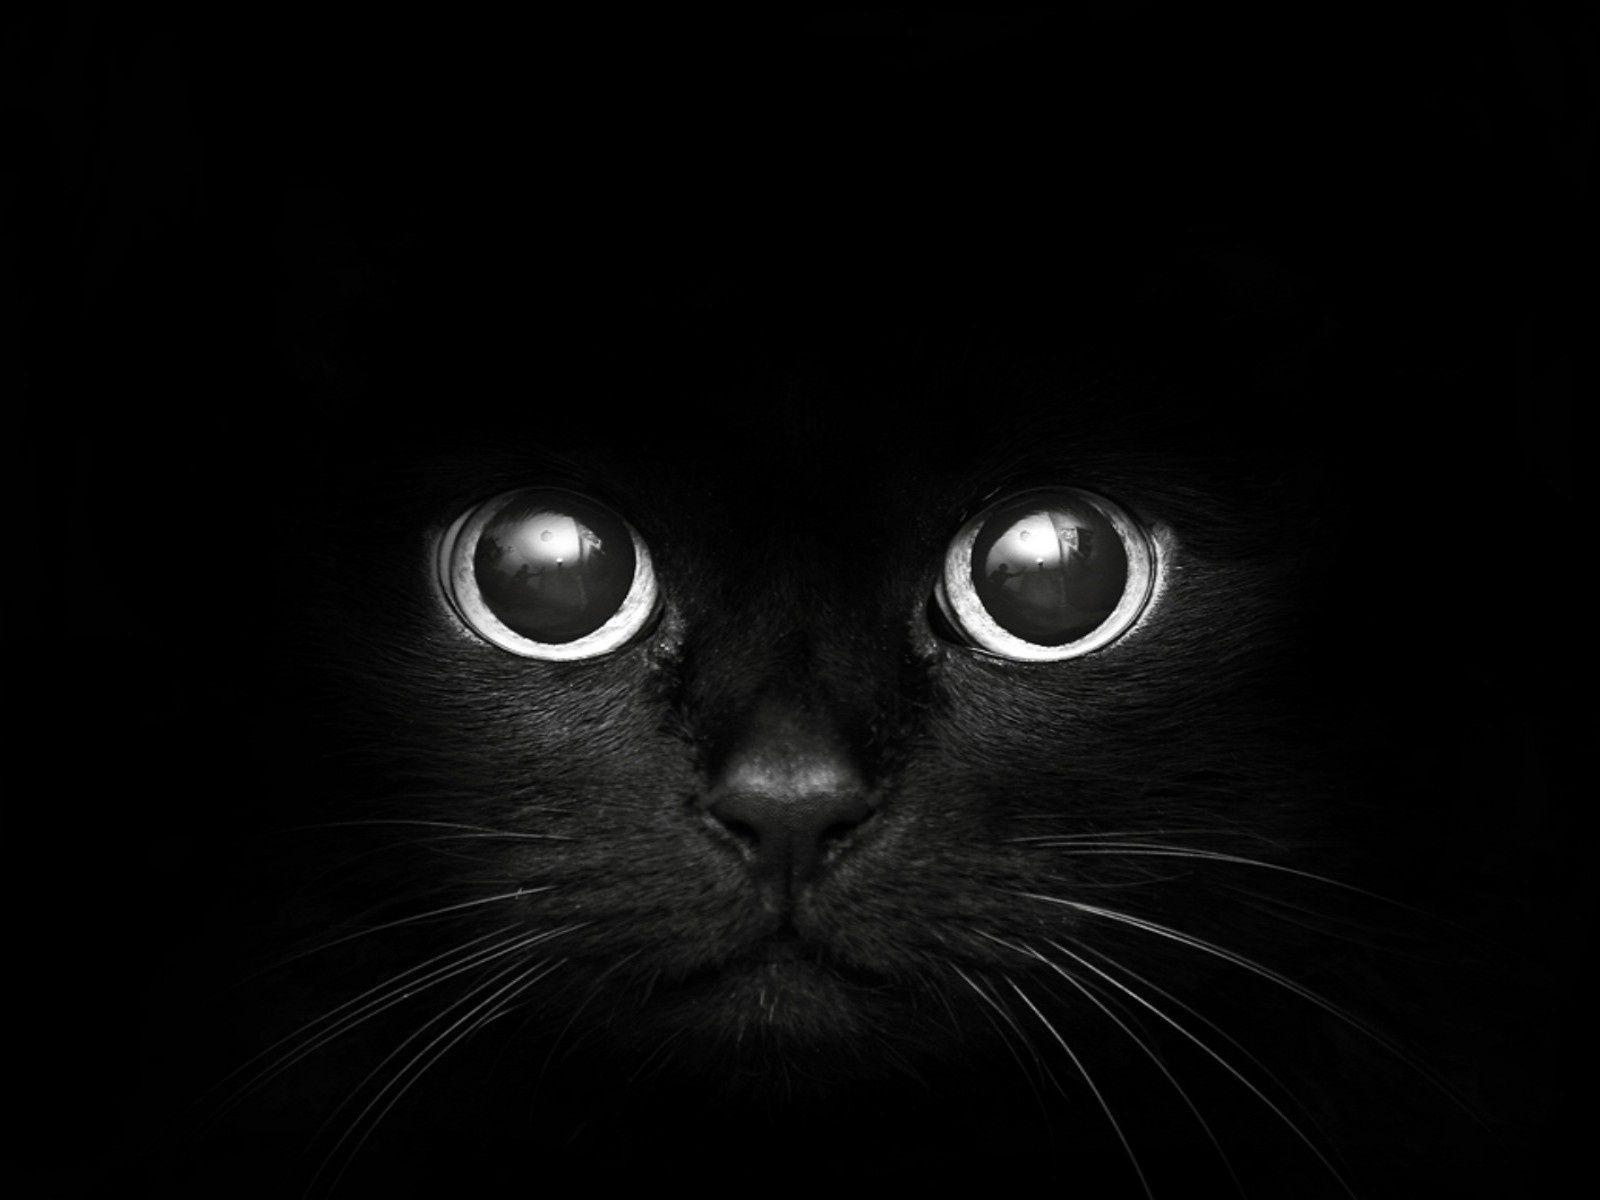 Black Cat with Big Eyes wallpaper 1080p (1600 x 1200 ) Art Wallpaper